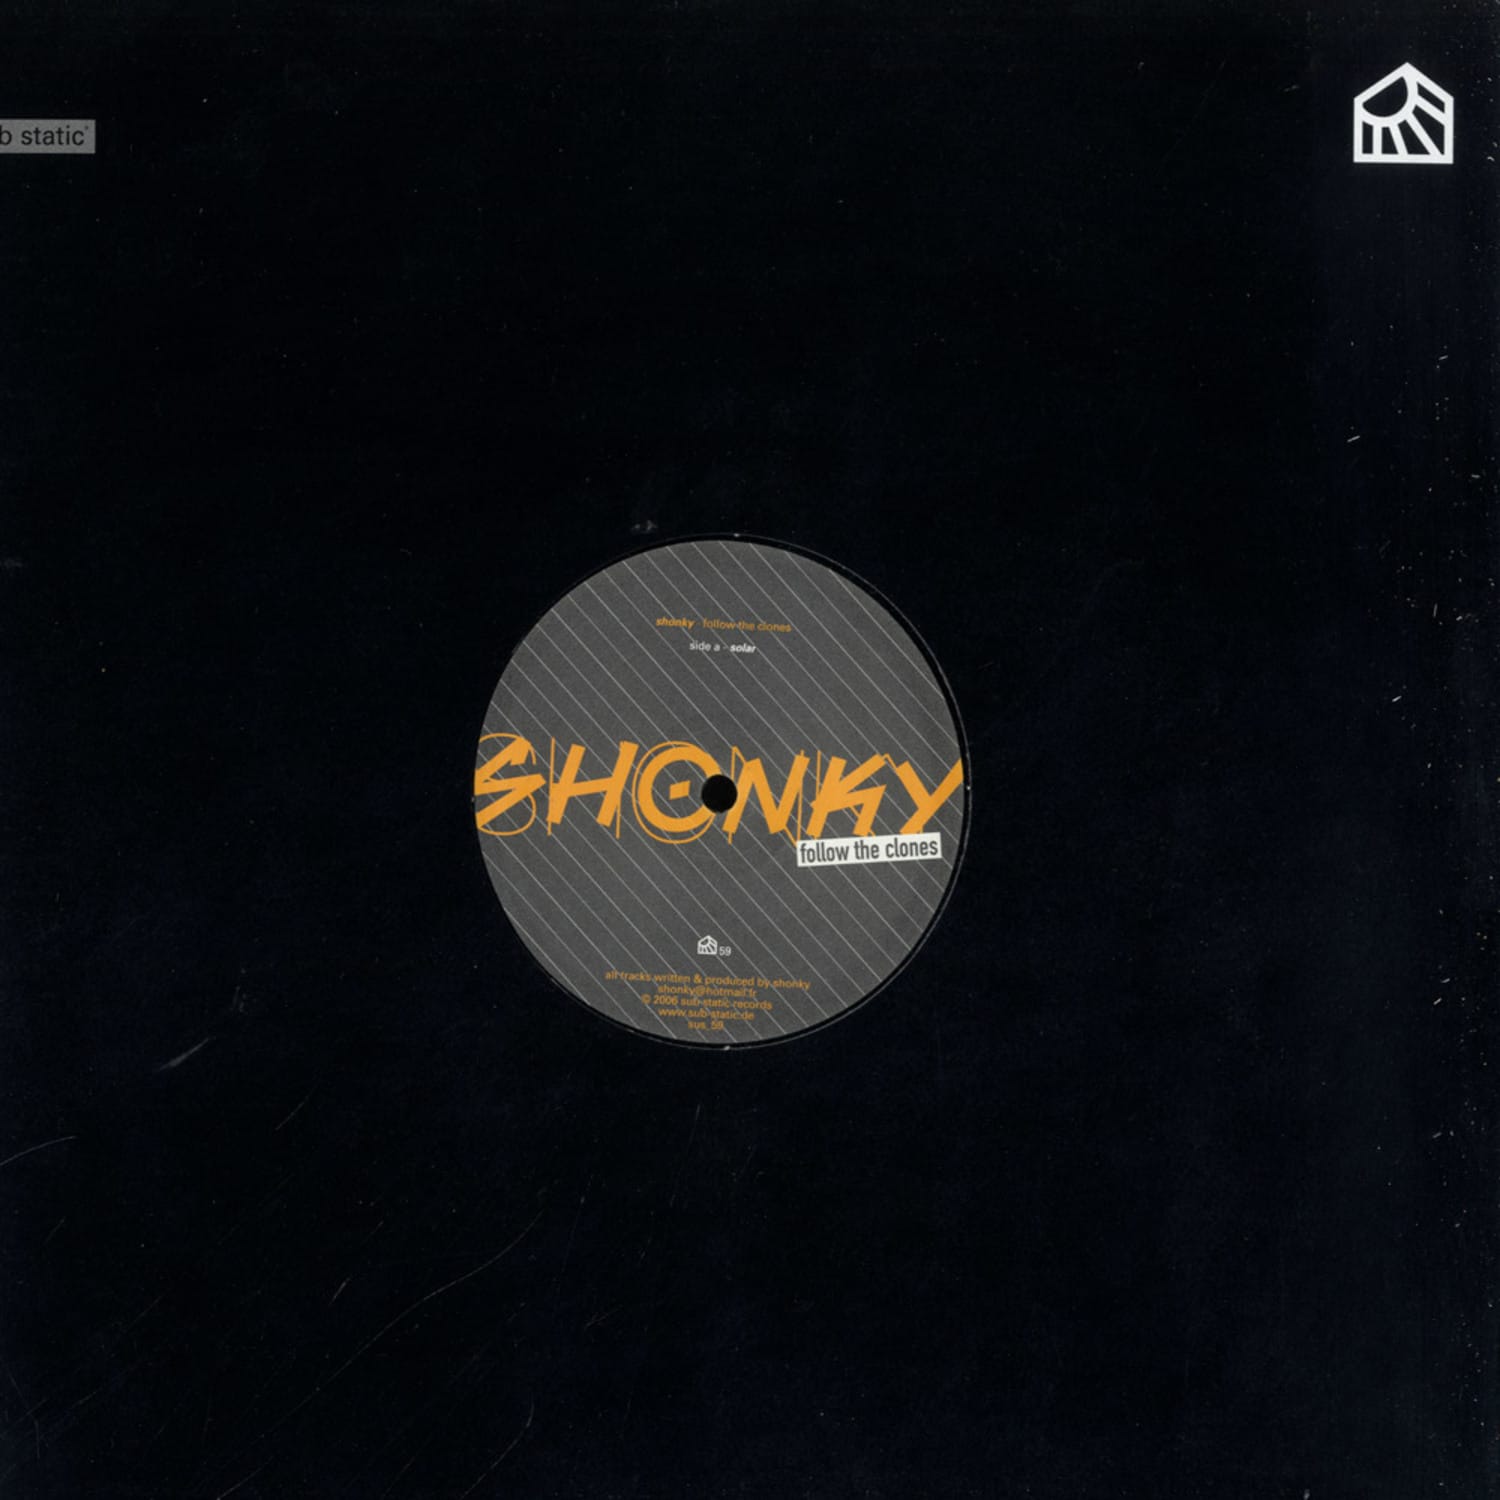 Shonky - FOLLOW THE CLONES